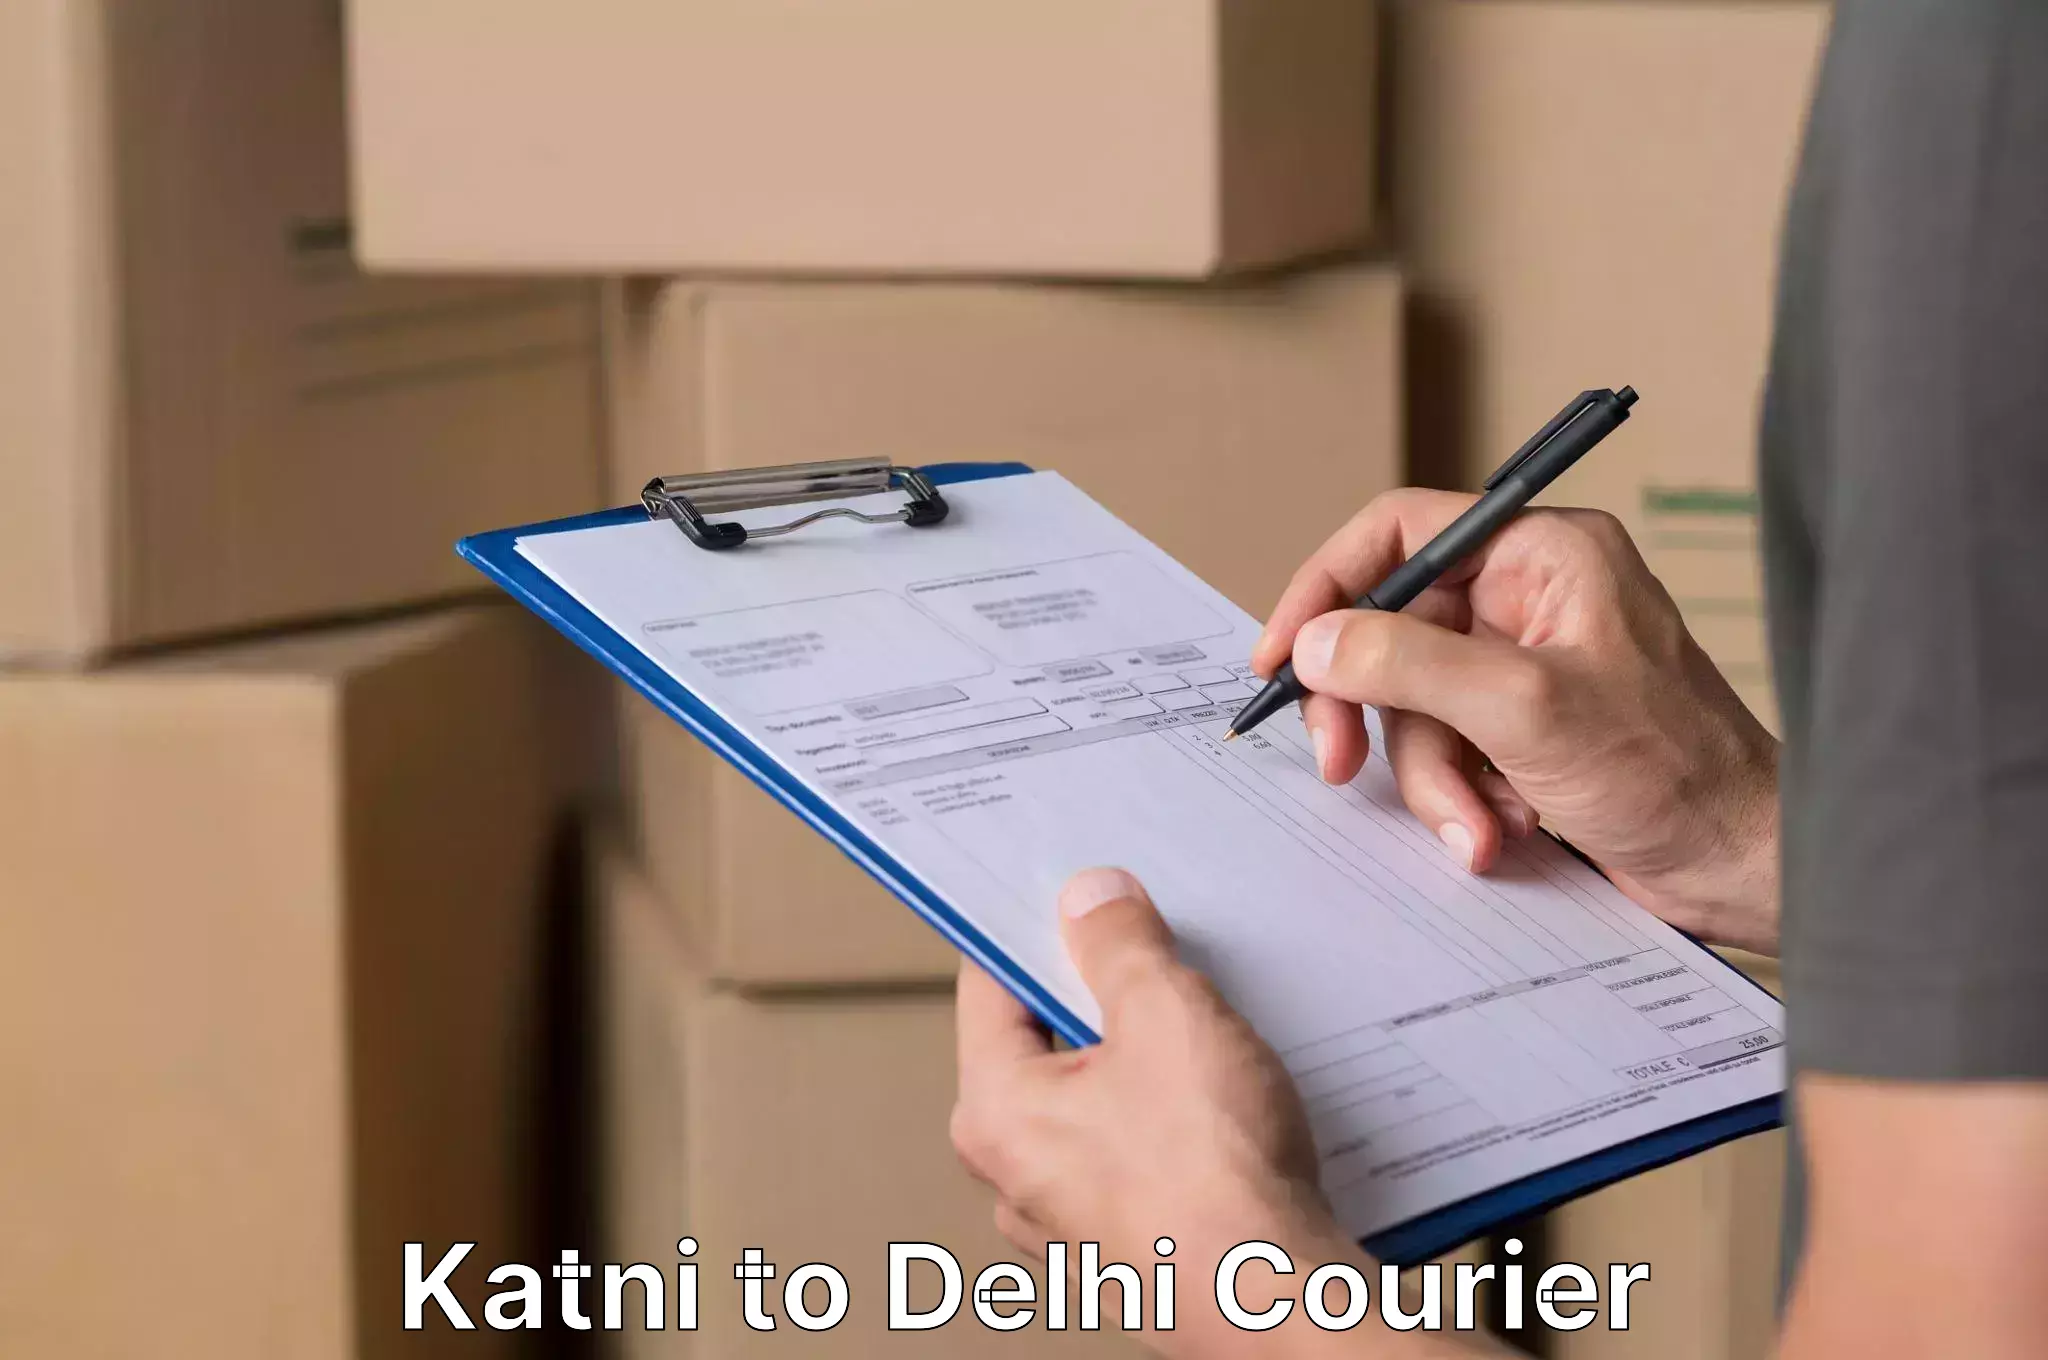 Cost-effective moving options Katni to Delhi Technological University DTU